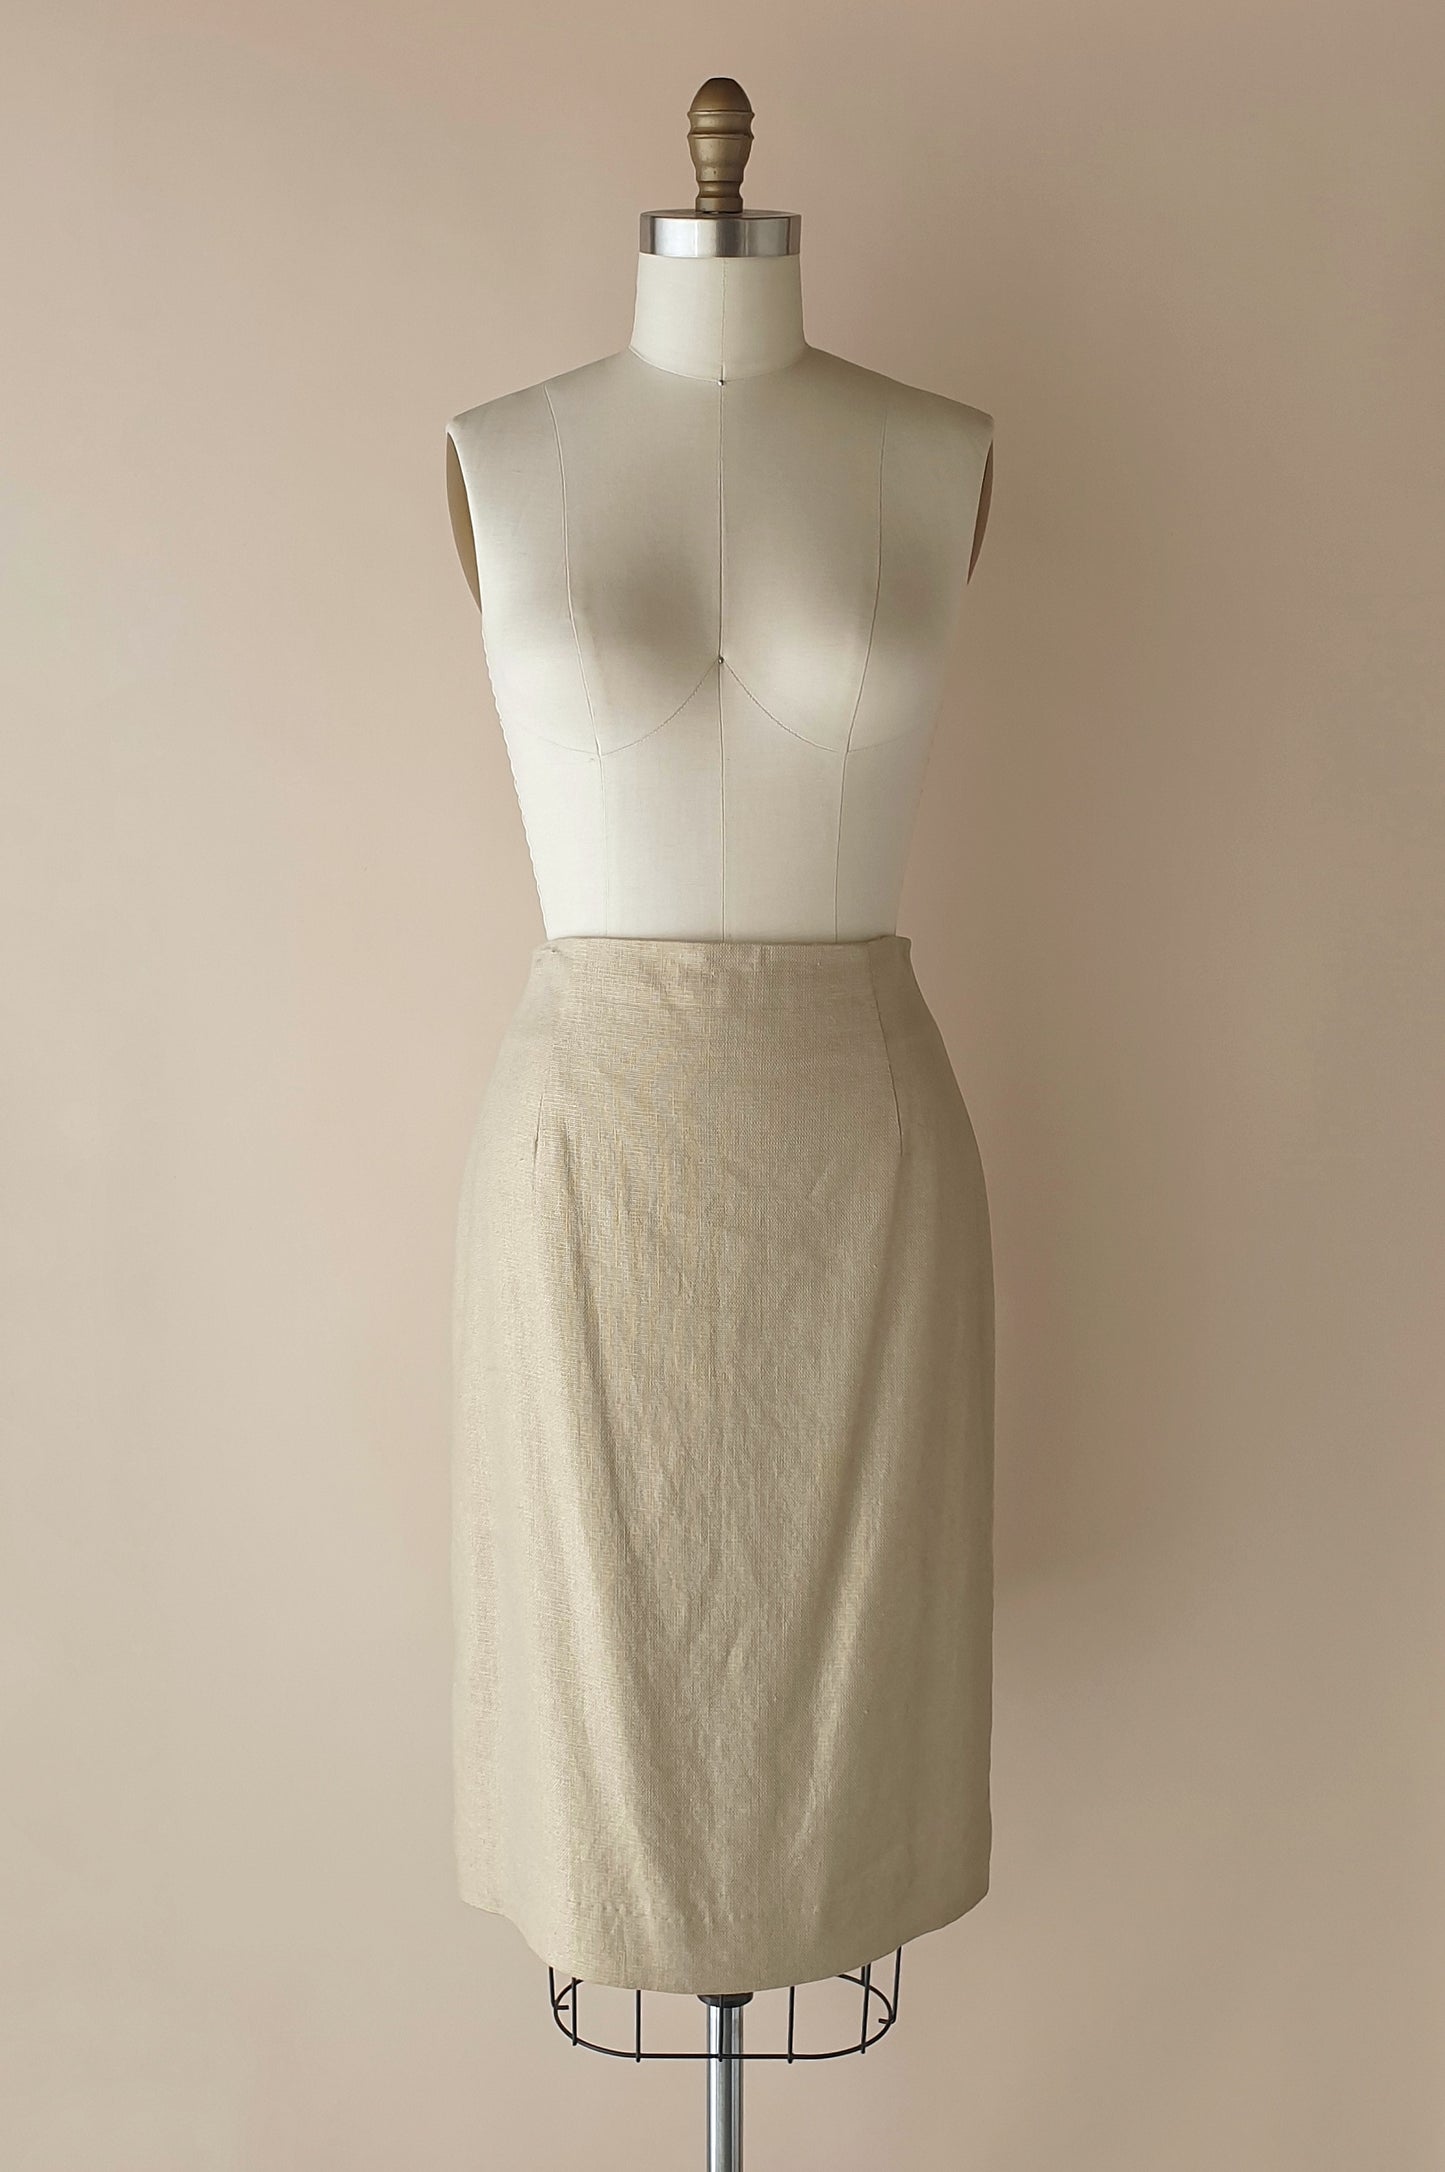 Gold Carla Zampatti pencil skirt Size XS/S